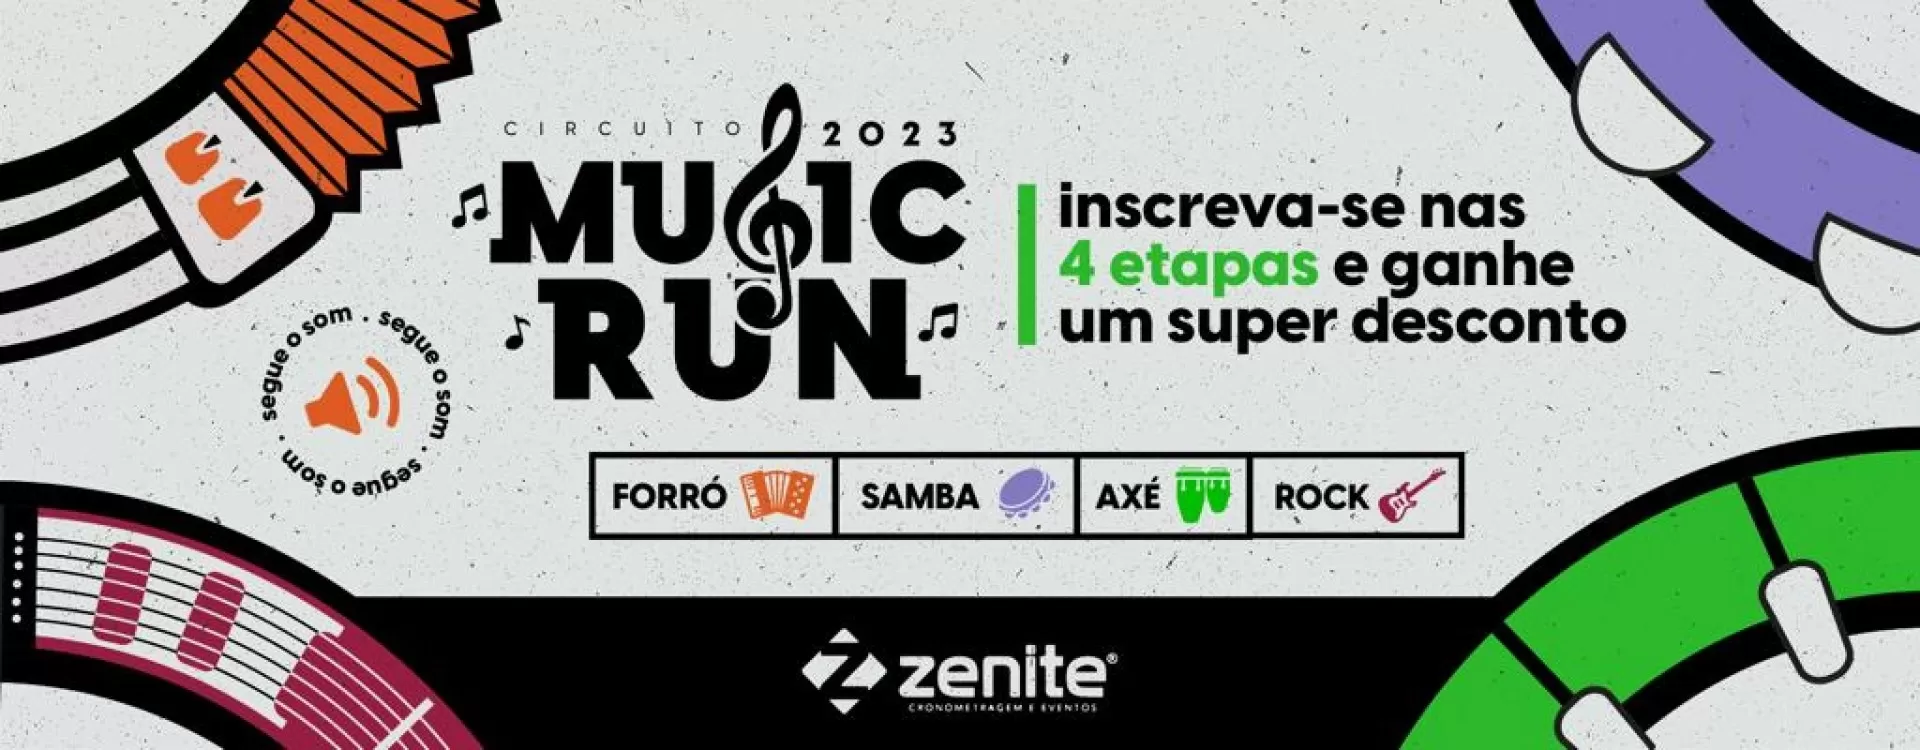 Music run 2023